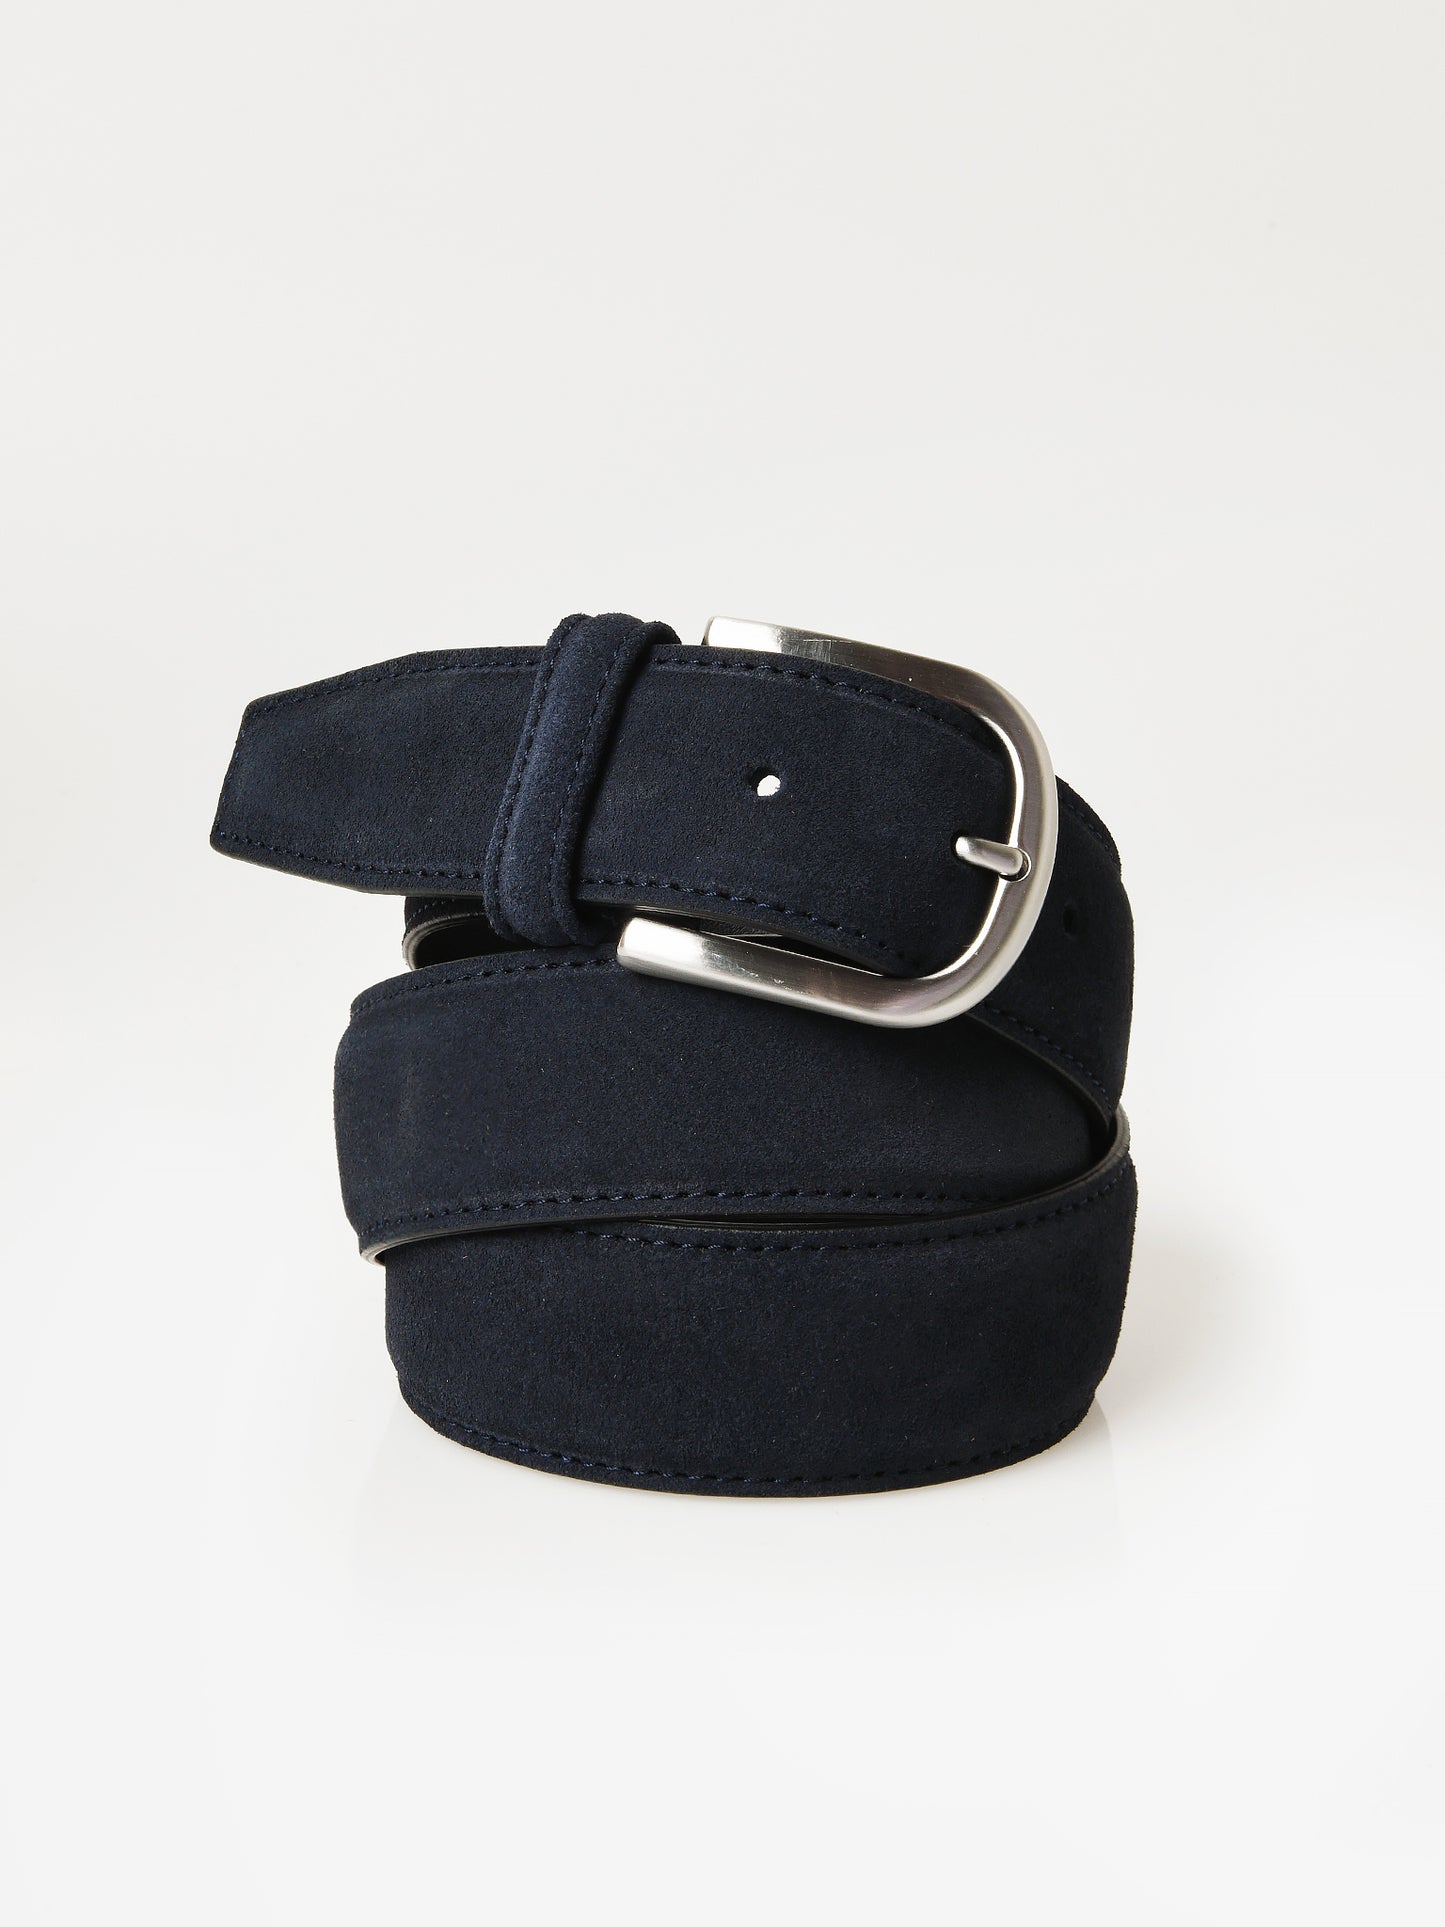 Andersons Men's Leather Belt